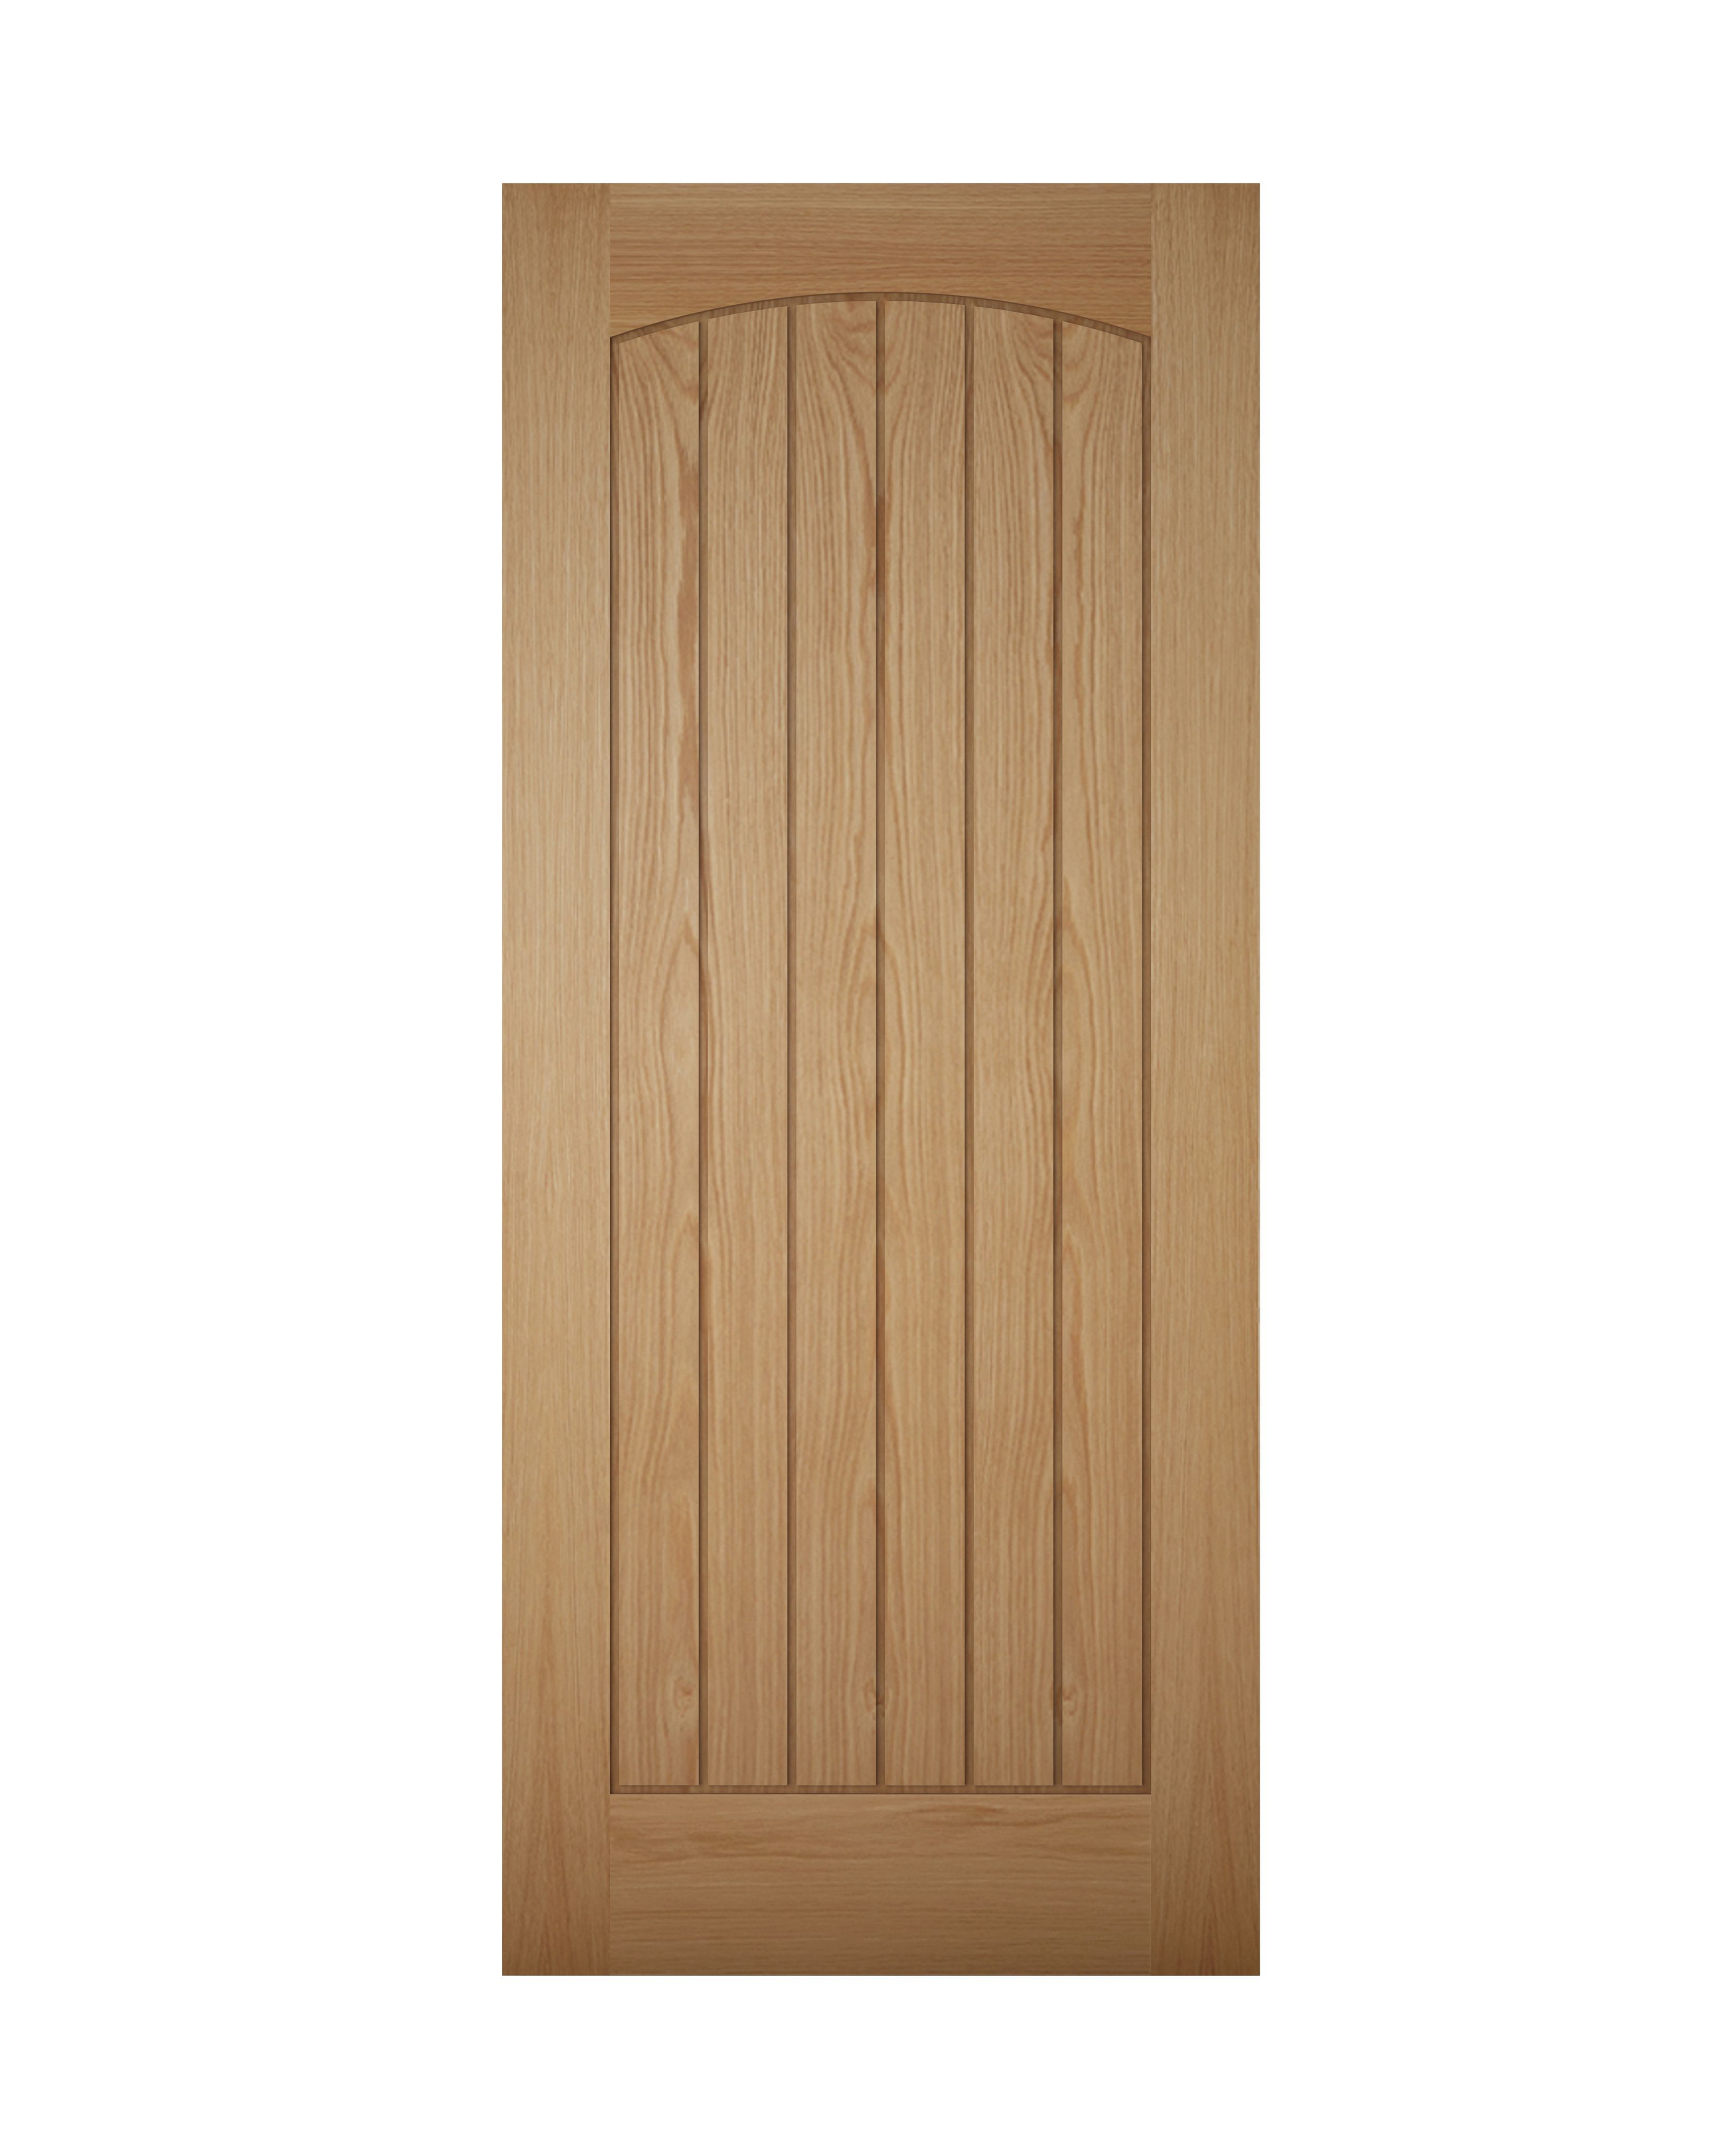 Geom Cottage White oak veneer Left & RHed Front door, (H)1981mm (W)762mm